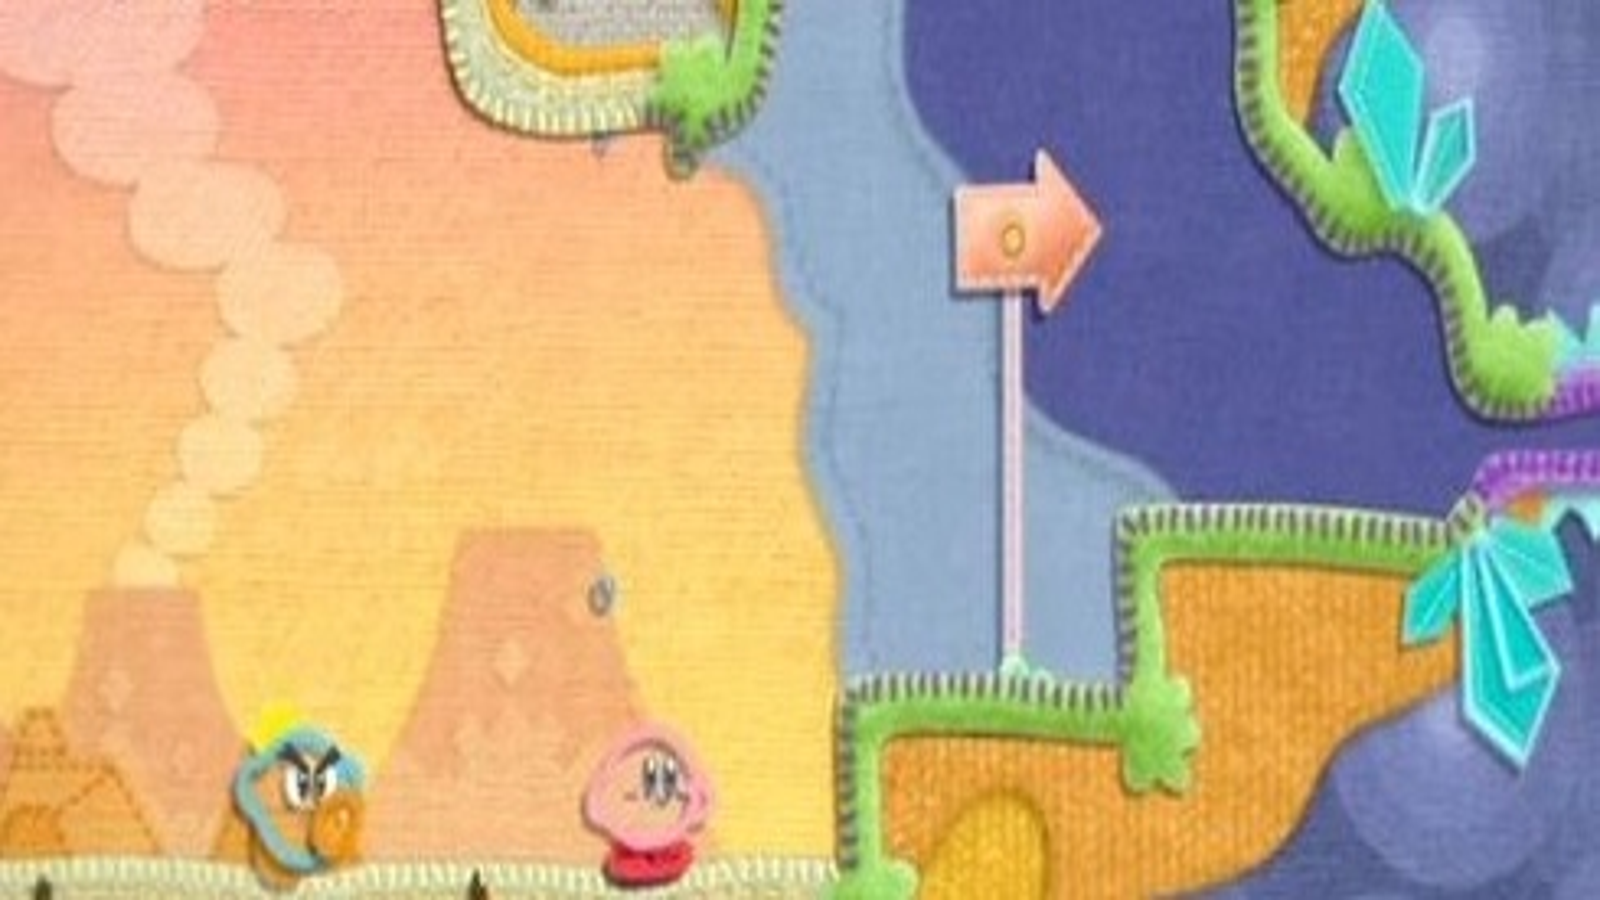 King Dedede Returns in Latest Kirby's Epic Yarn Trailer